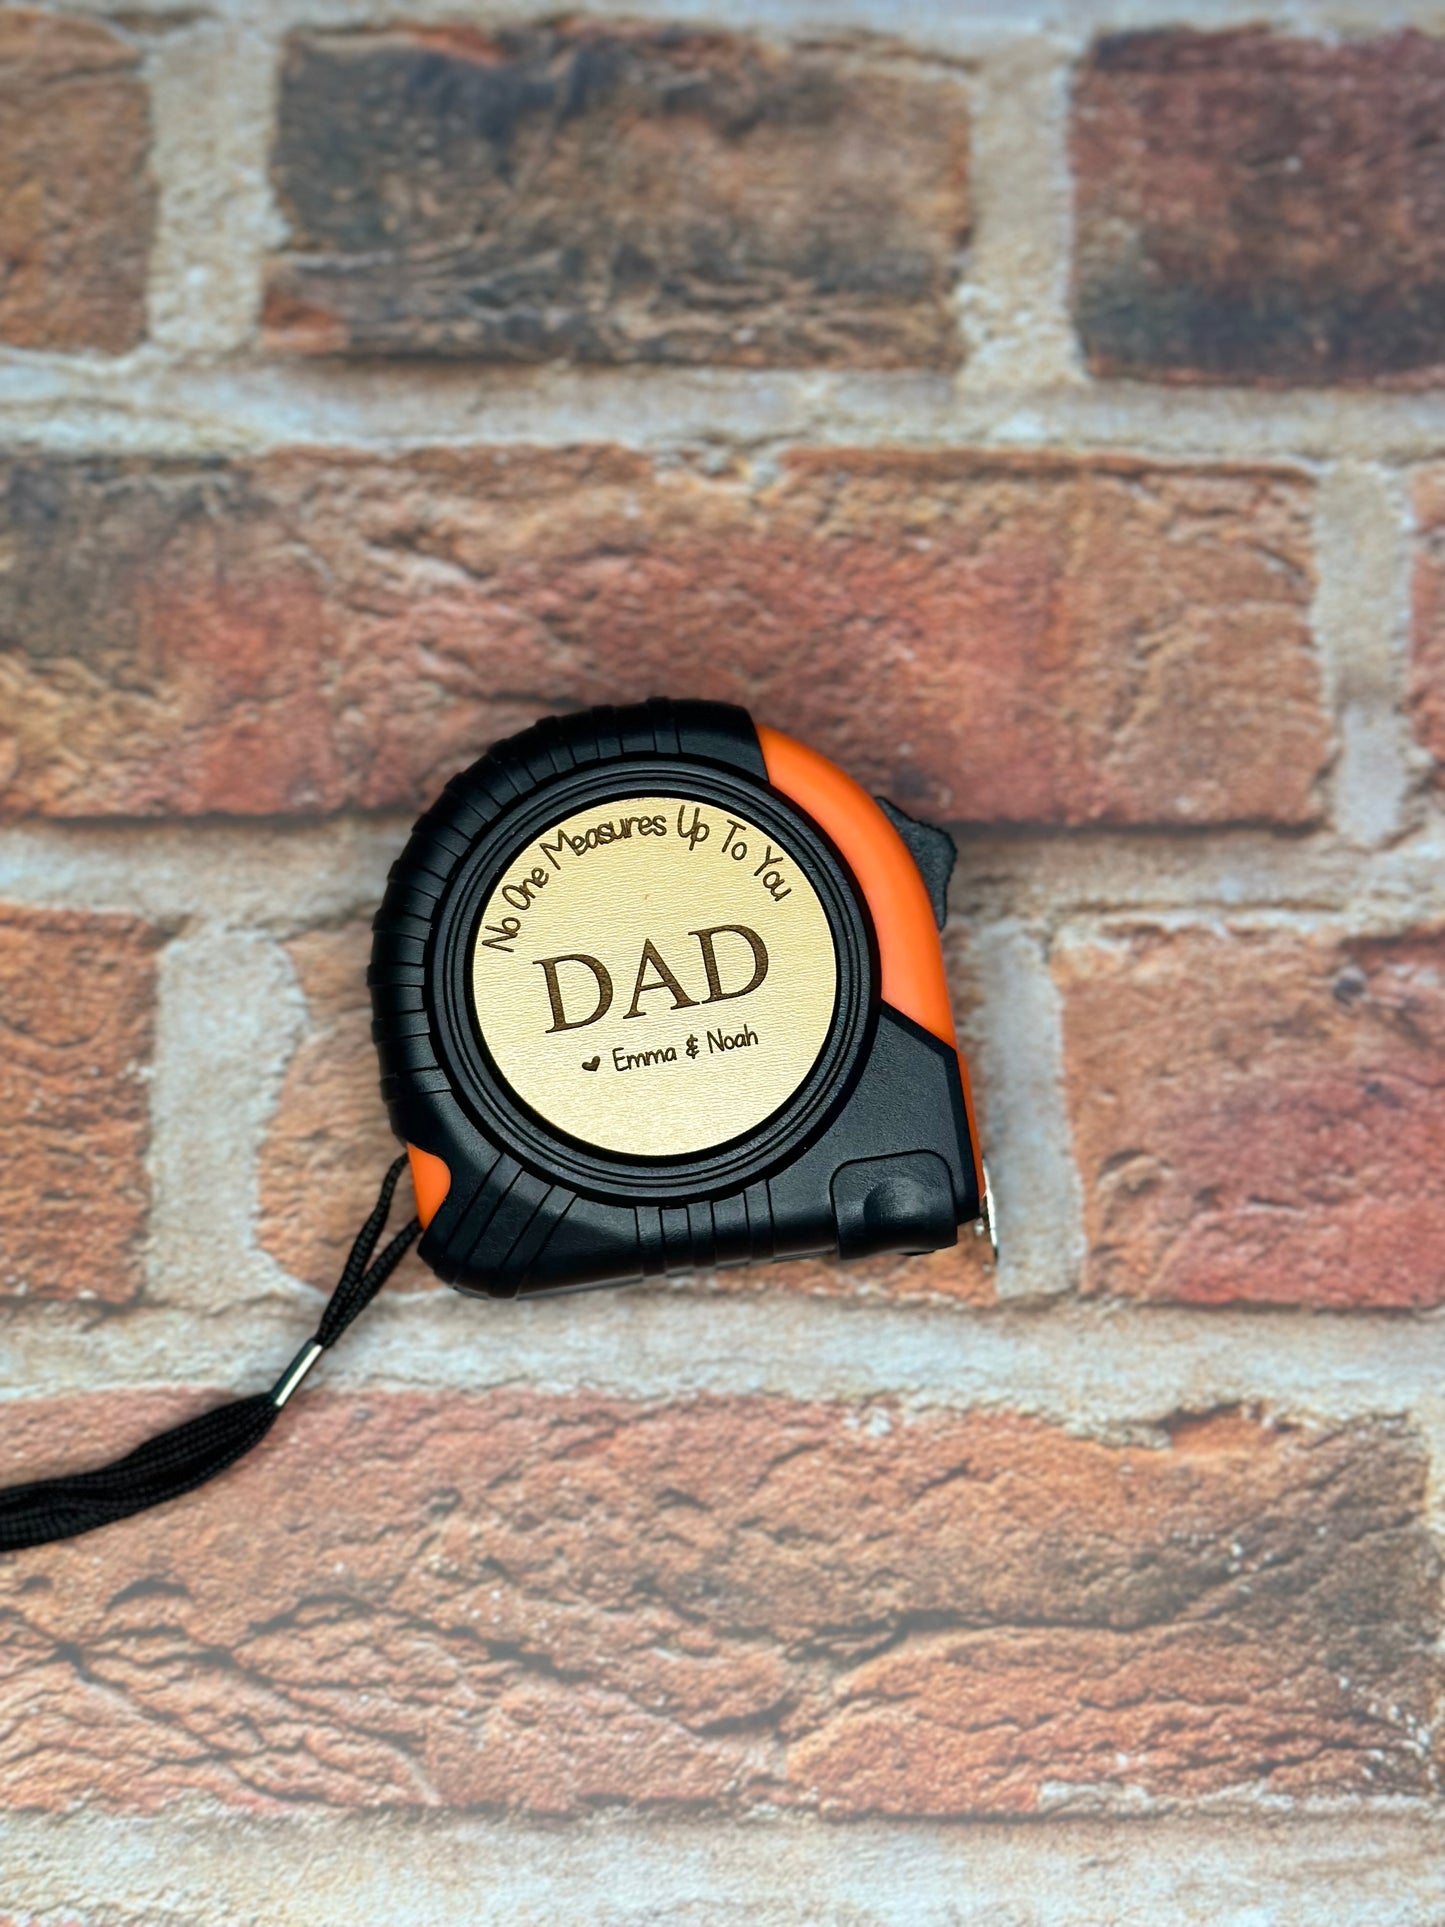 Dad tape measure